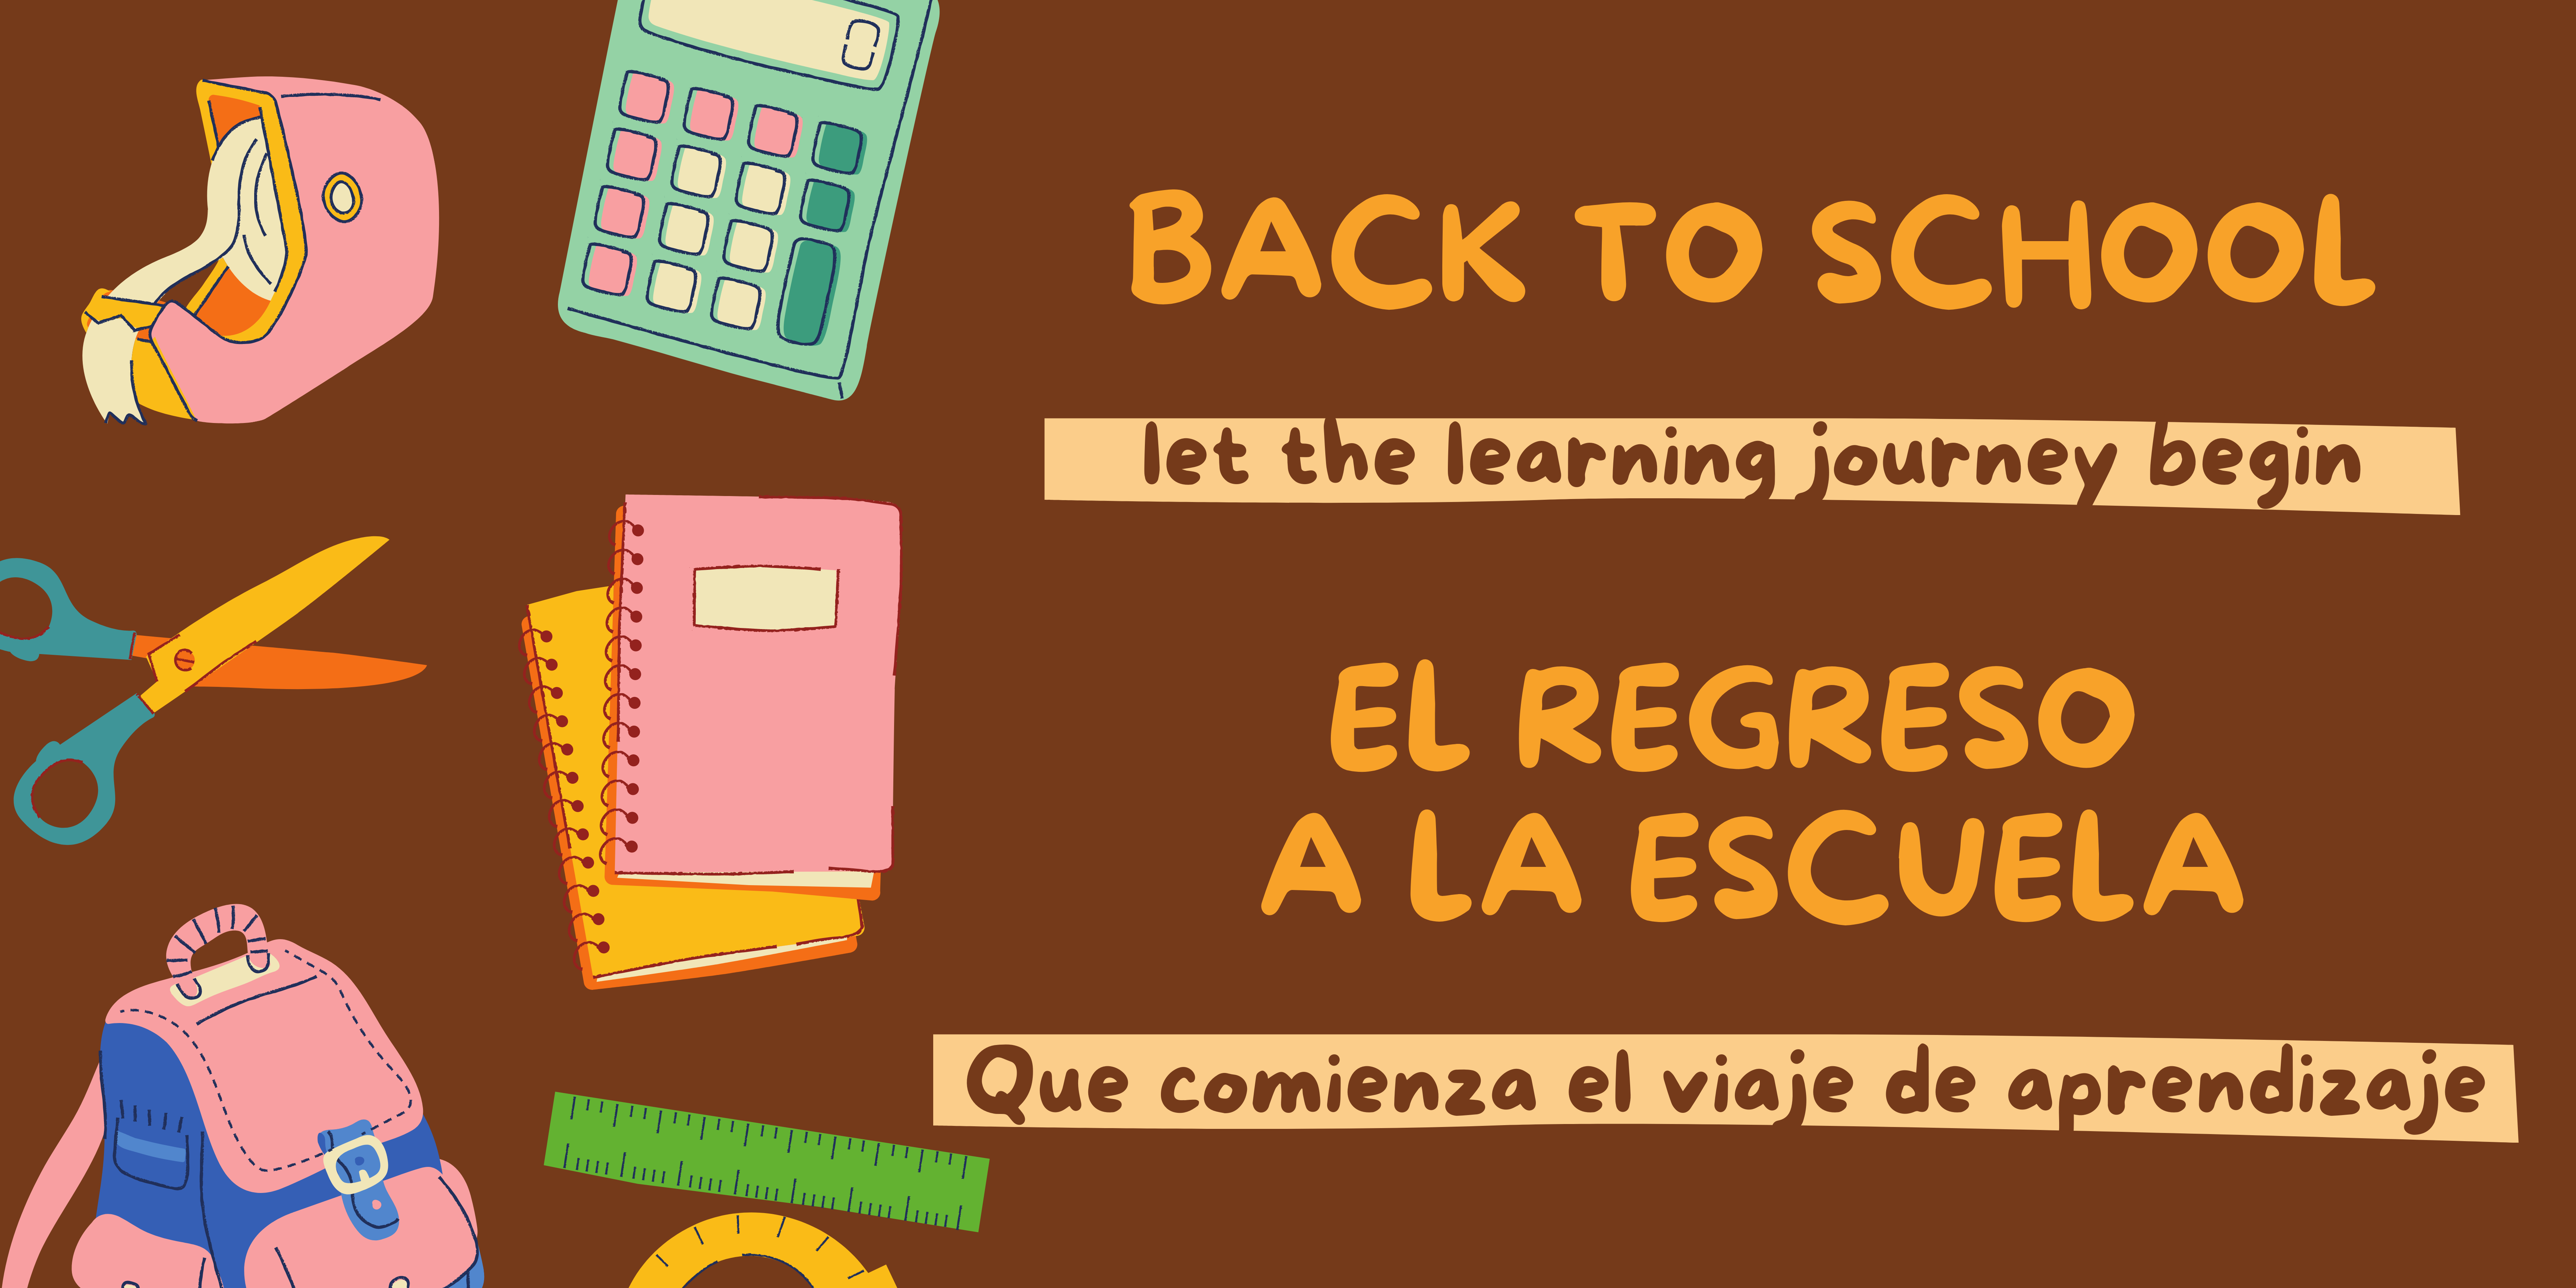 Orange text on brown background with images of school supplies. Text says, "Back to School" and "El Regreso de la escuela"